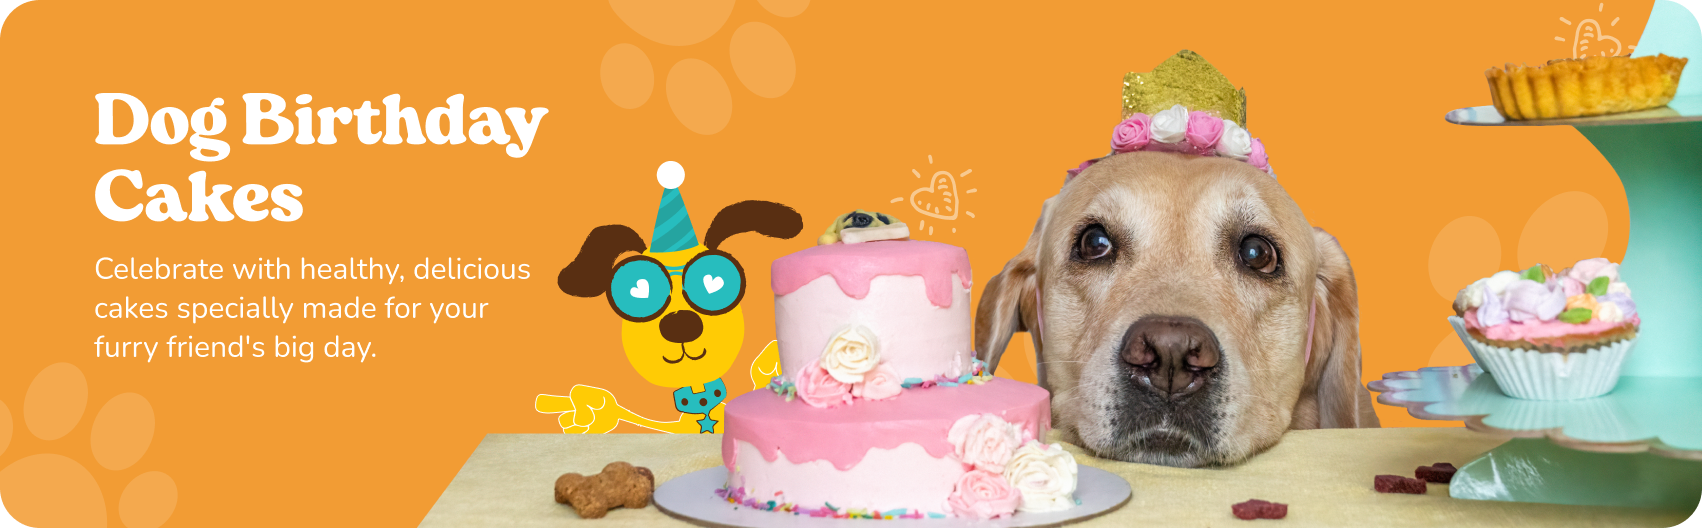 dog birthday cake, cake for dogs